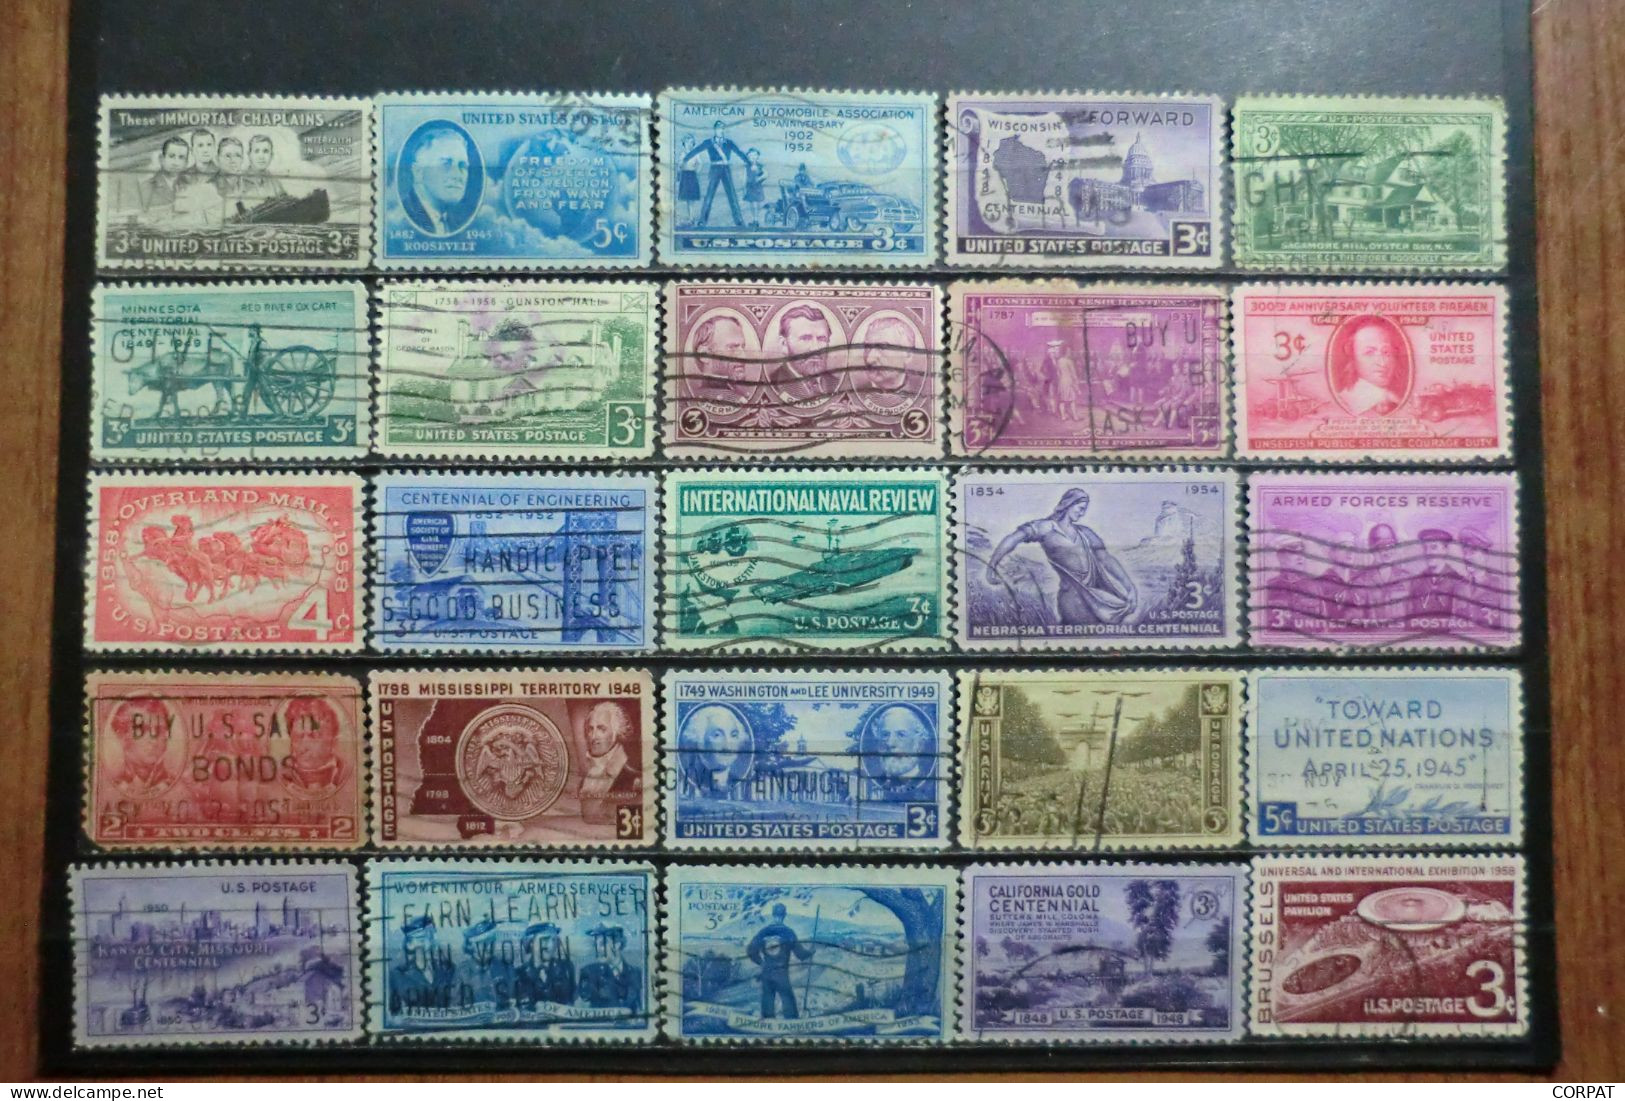 USA : Lotto di francobolli usati (7 photos)